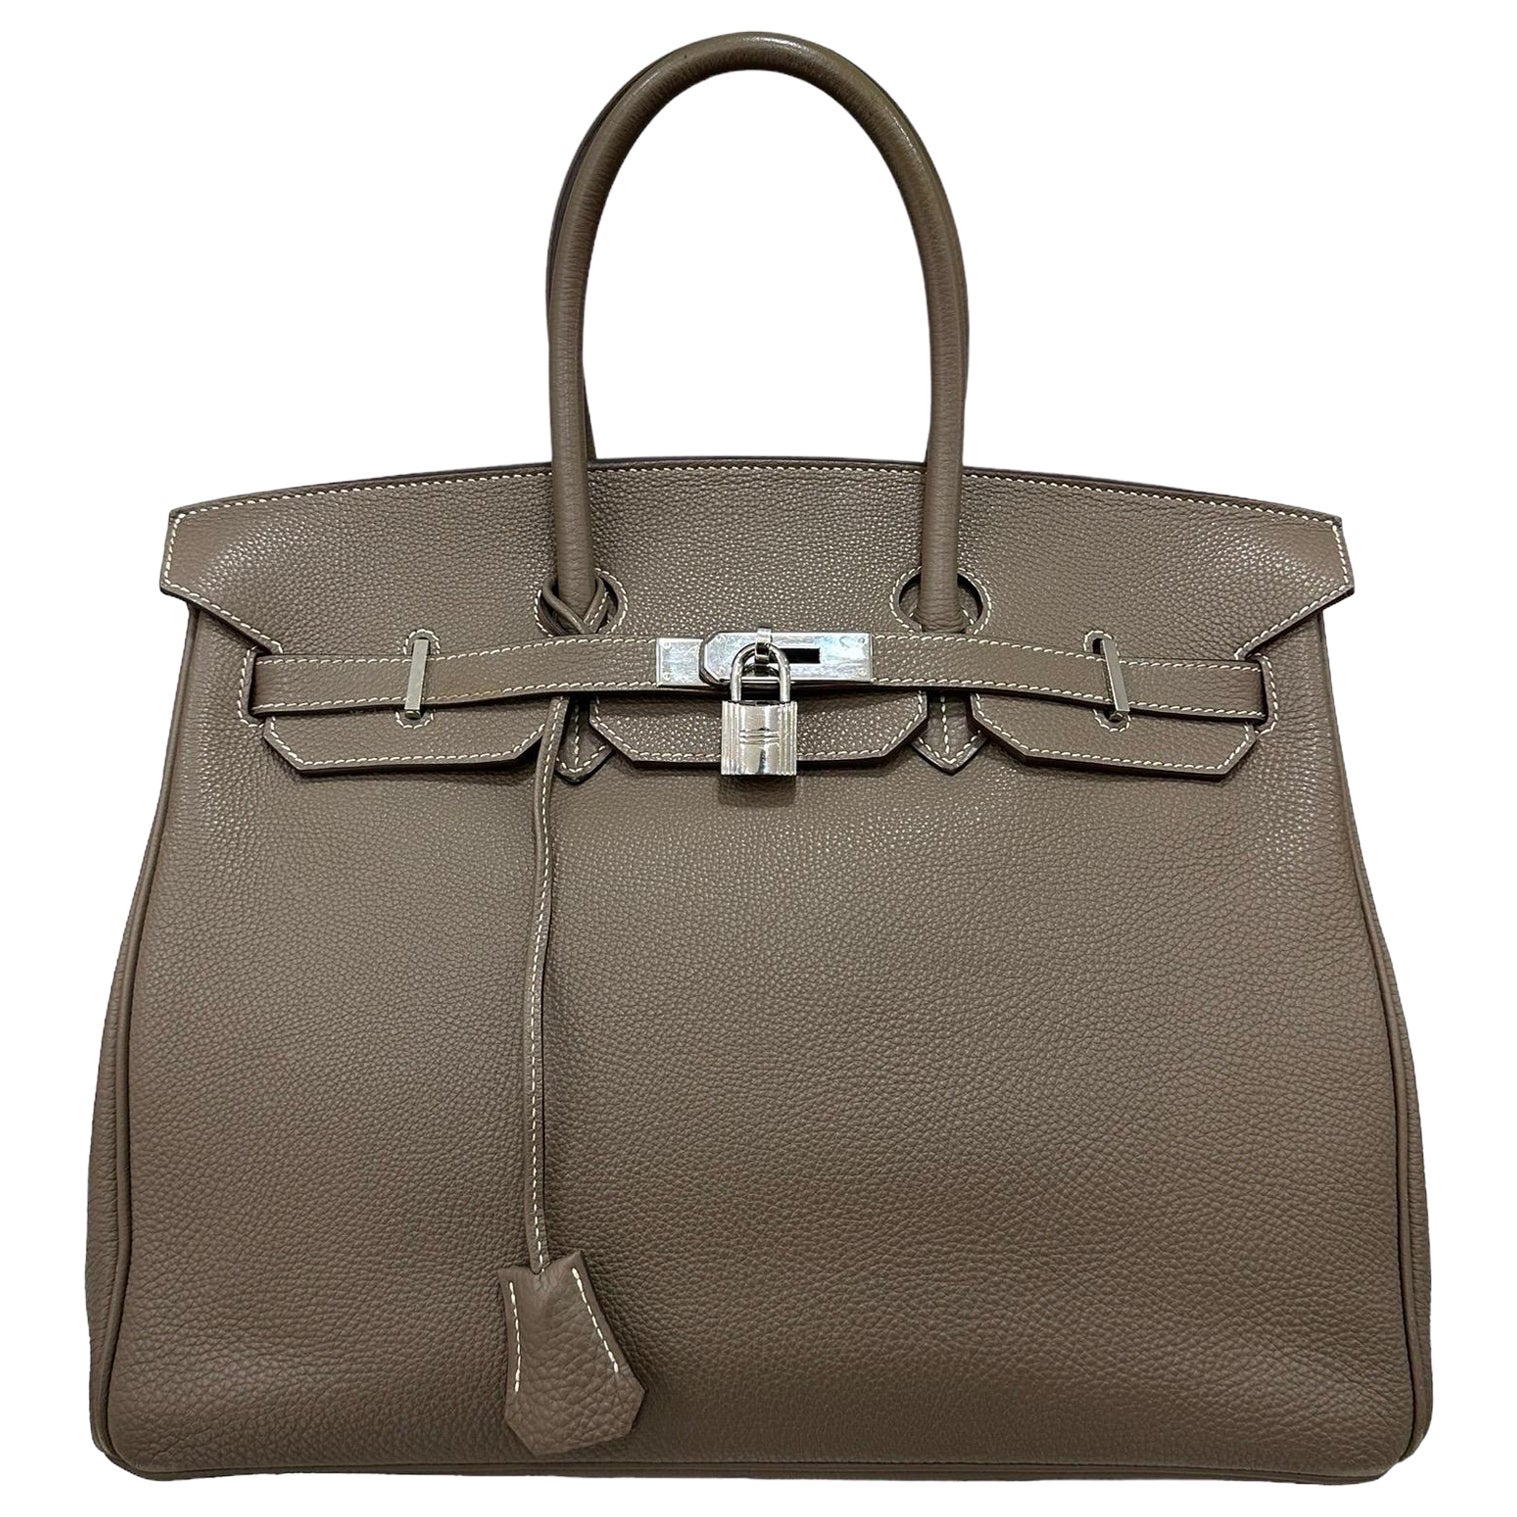 2008 Hermès Birkin 35 Togo Leder Toundra Top Handle Tasche